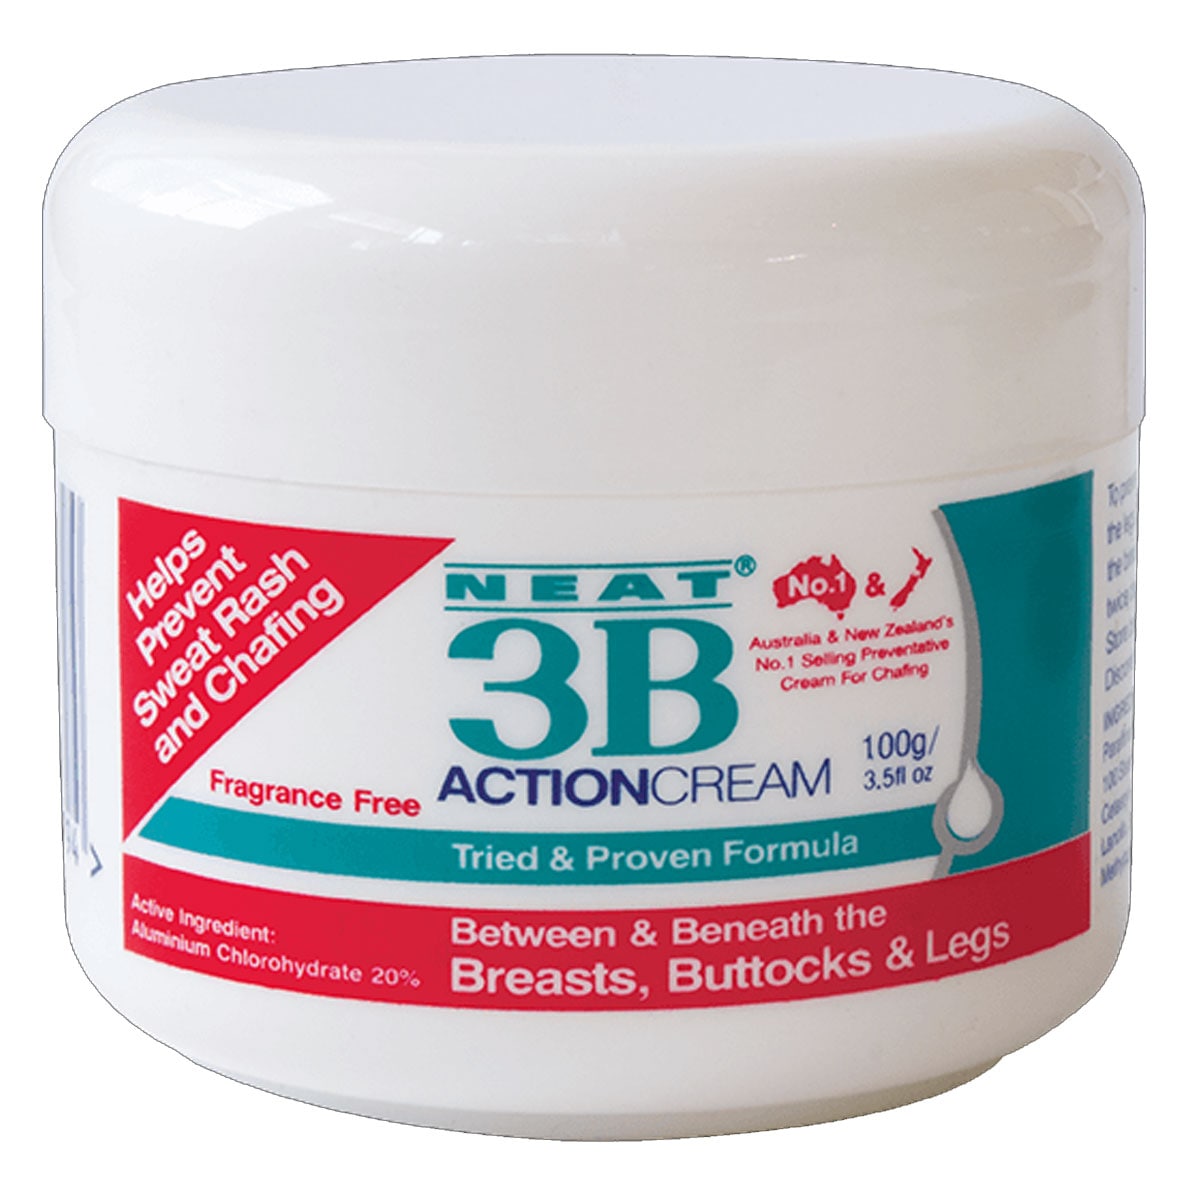 Neat 3B Action Cream 100g for Chaffing & Sweat Rash